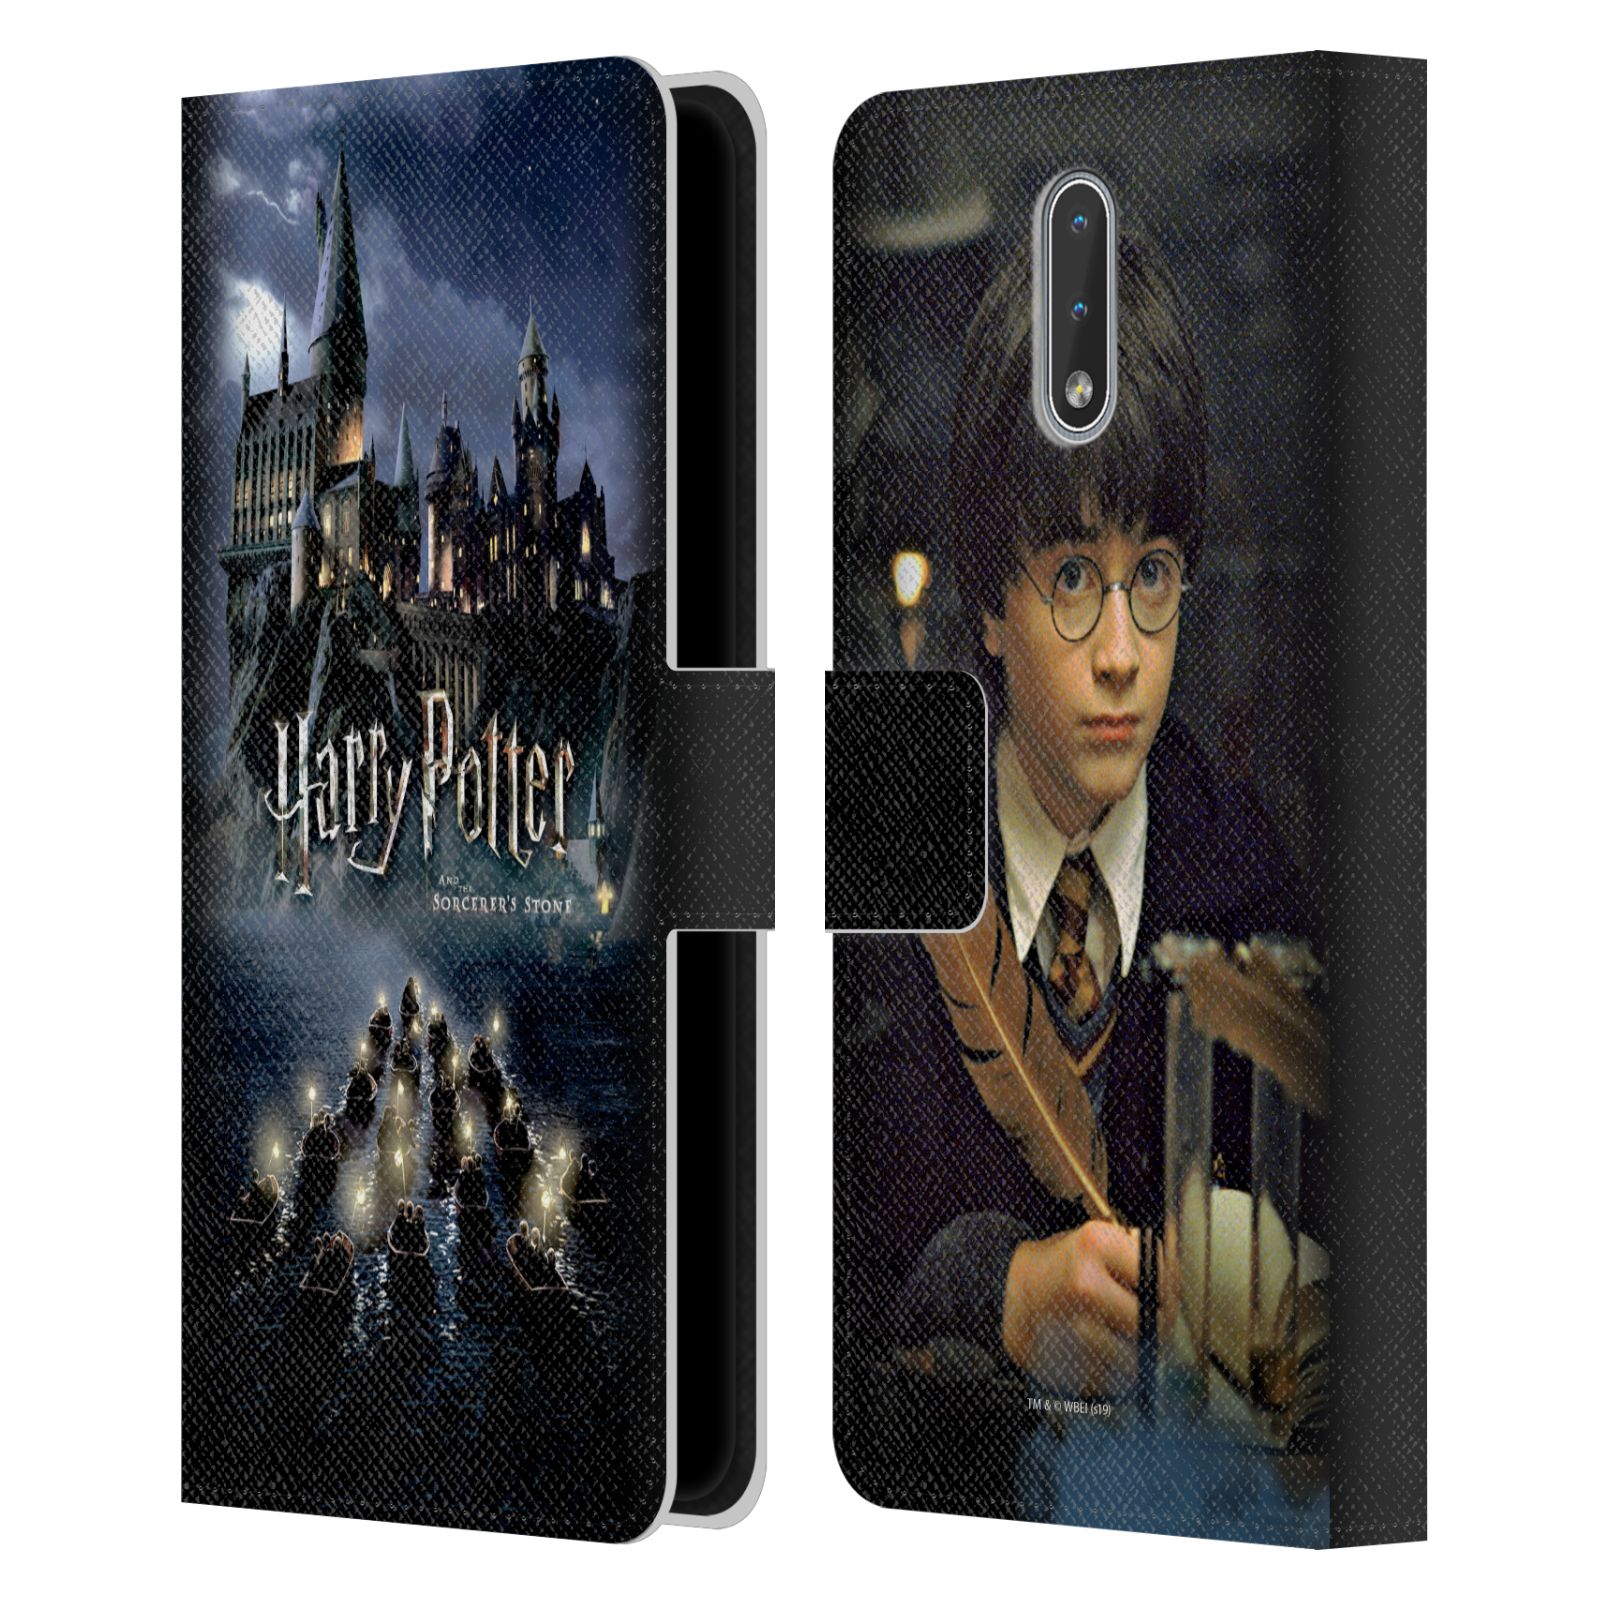 Pouzdro HEAD CASE na mobil Nokia 2.3 - Harry Potter škola v bradavicích